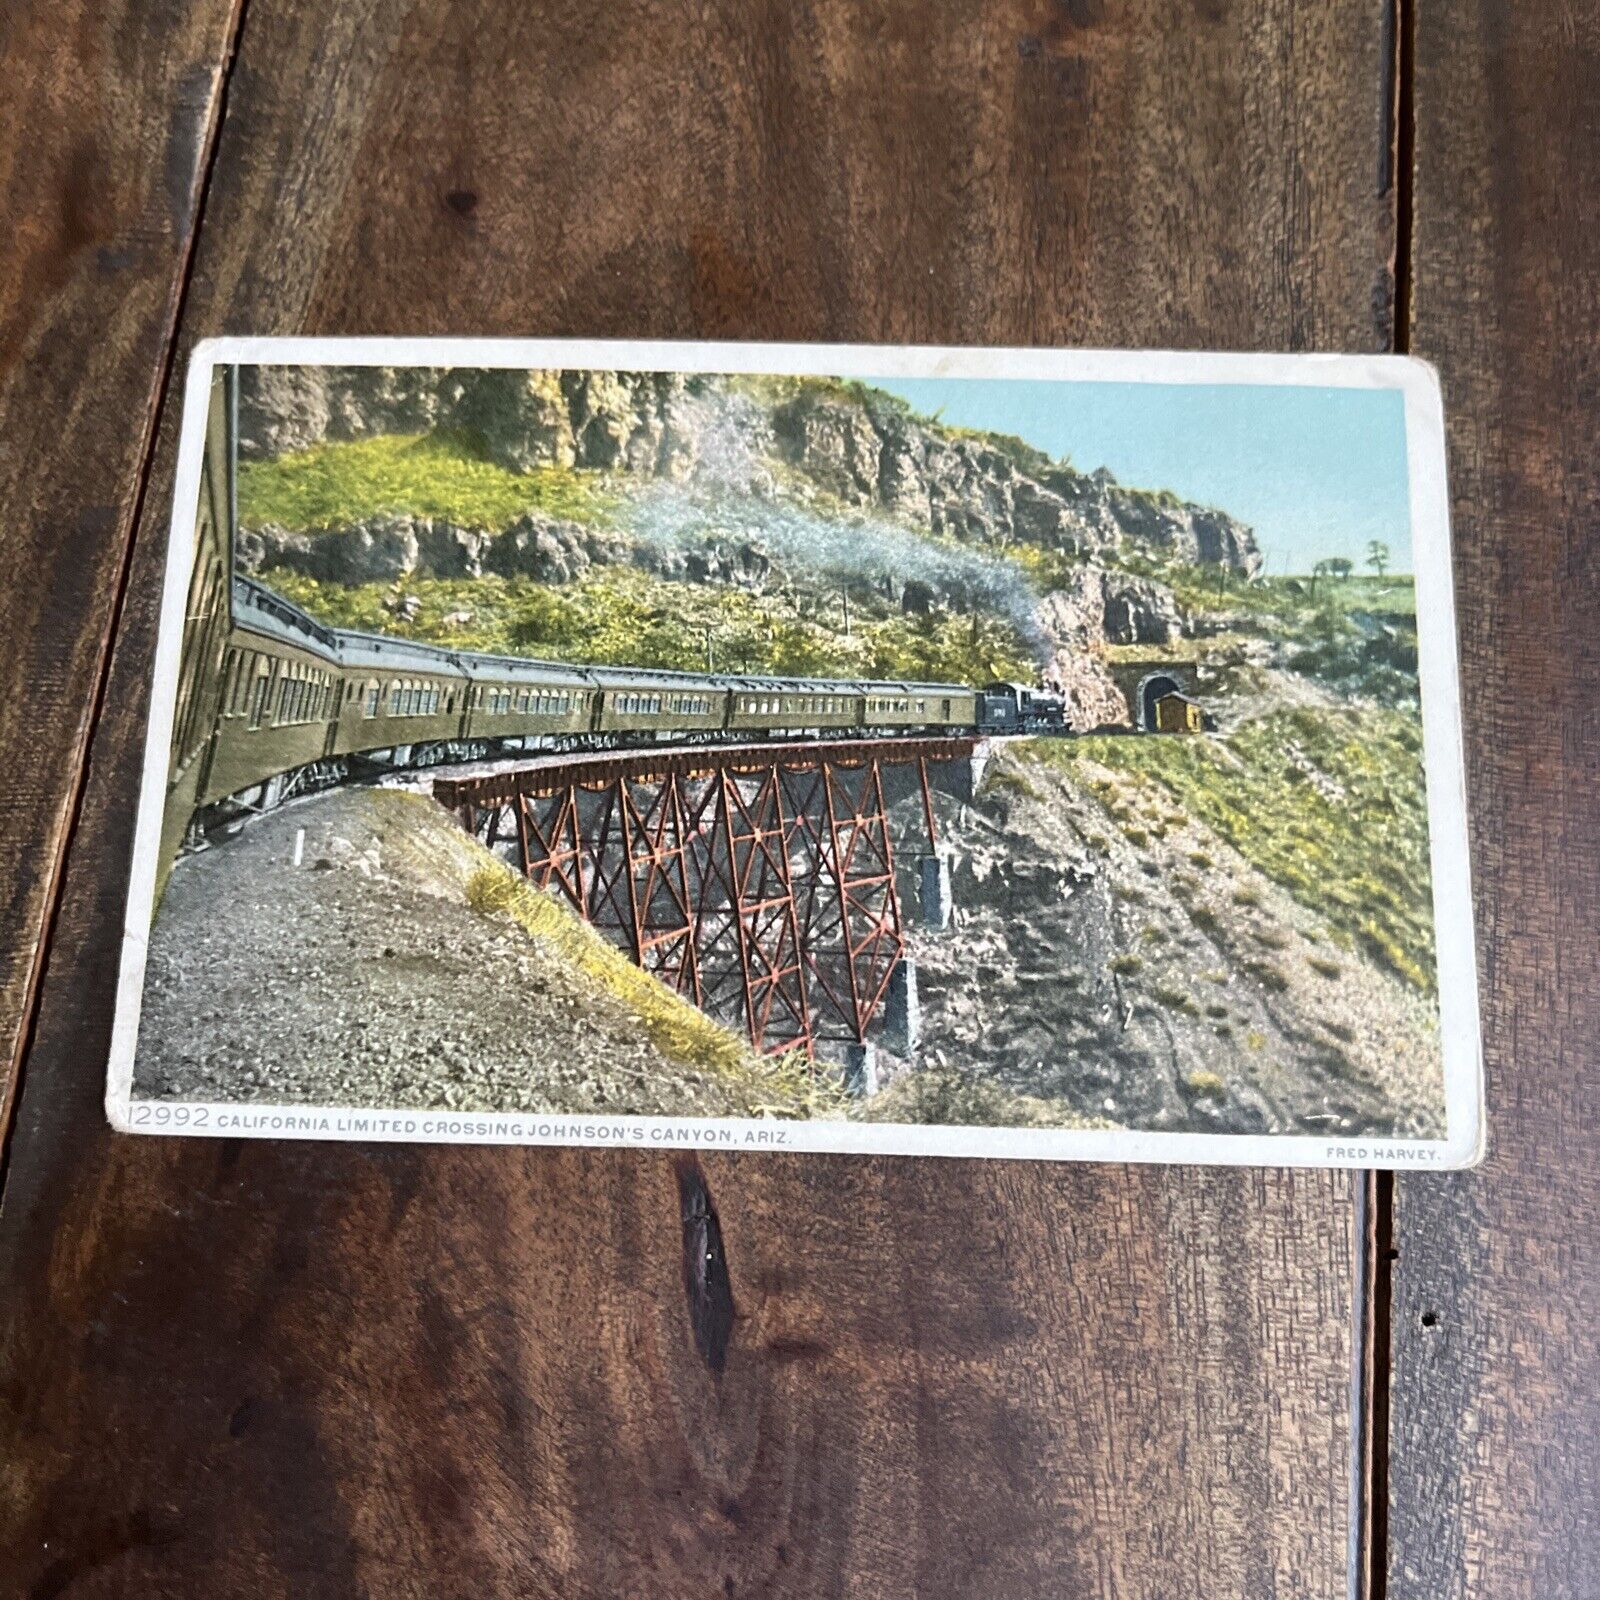 Vintage 1900\'s California Limited Crossing Johnson\'s Canyon AZ Blank Post Card